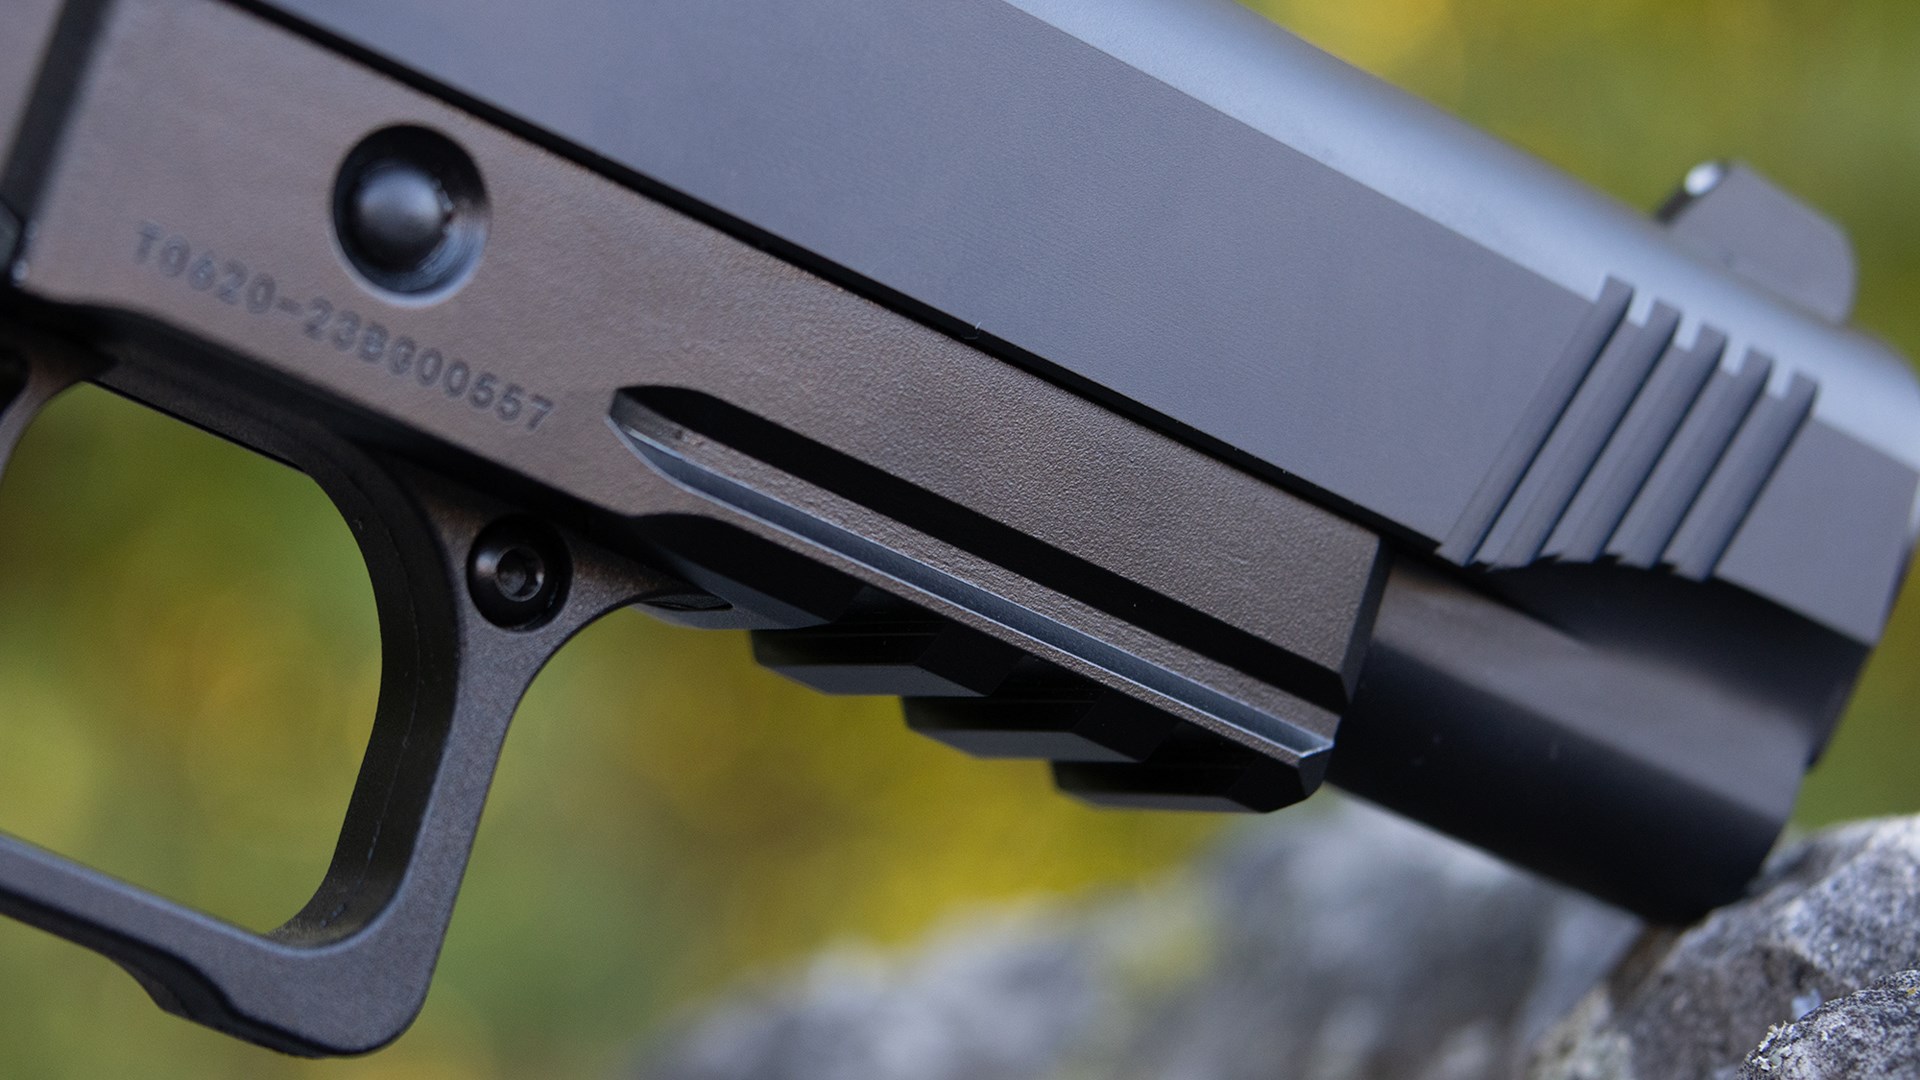 Picatinny accessory rail on the Tisas B9R DS pistol.